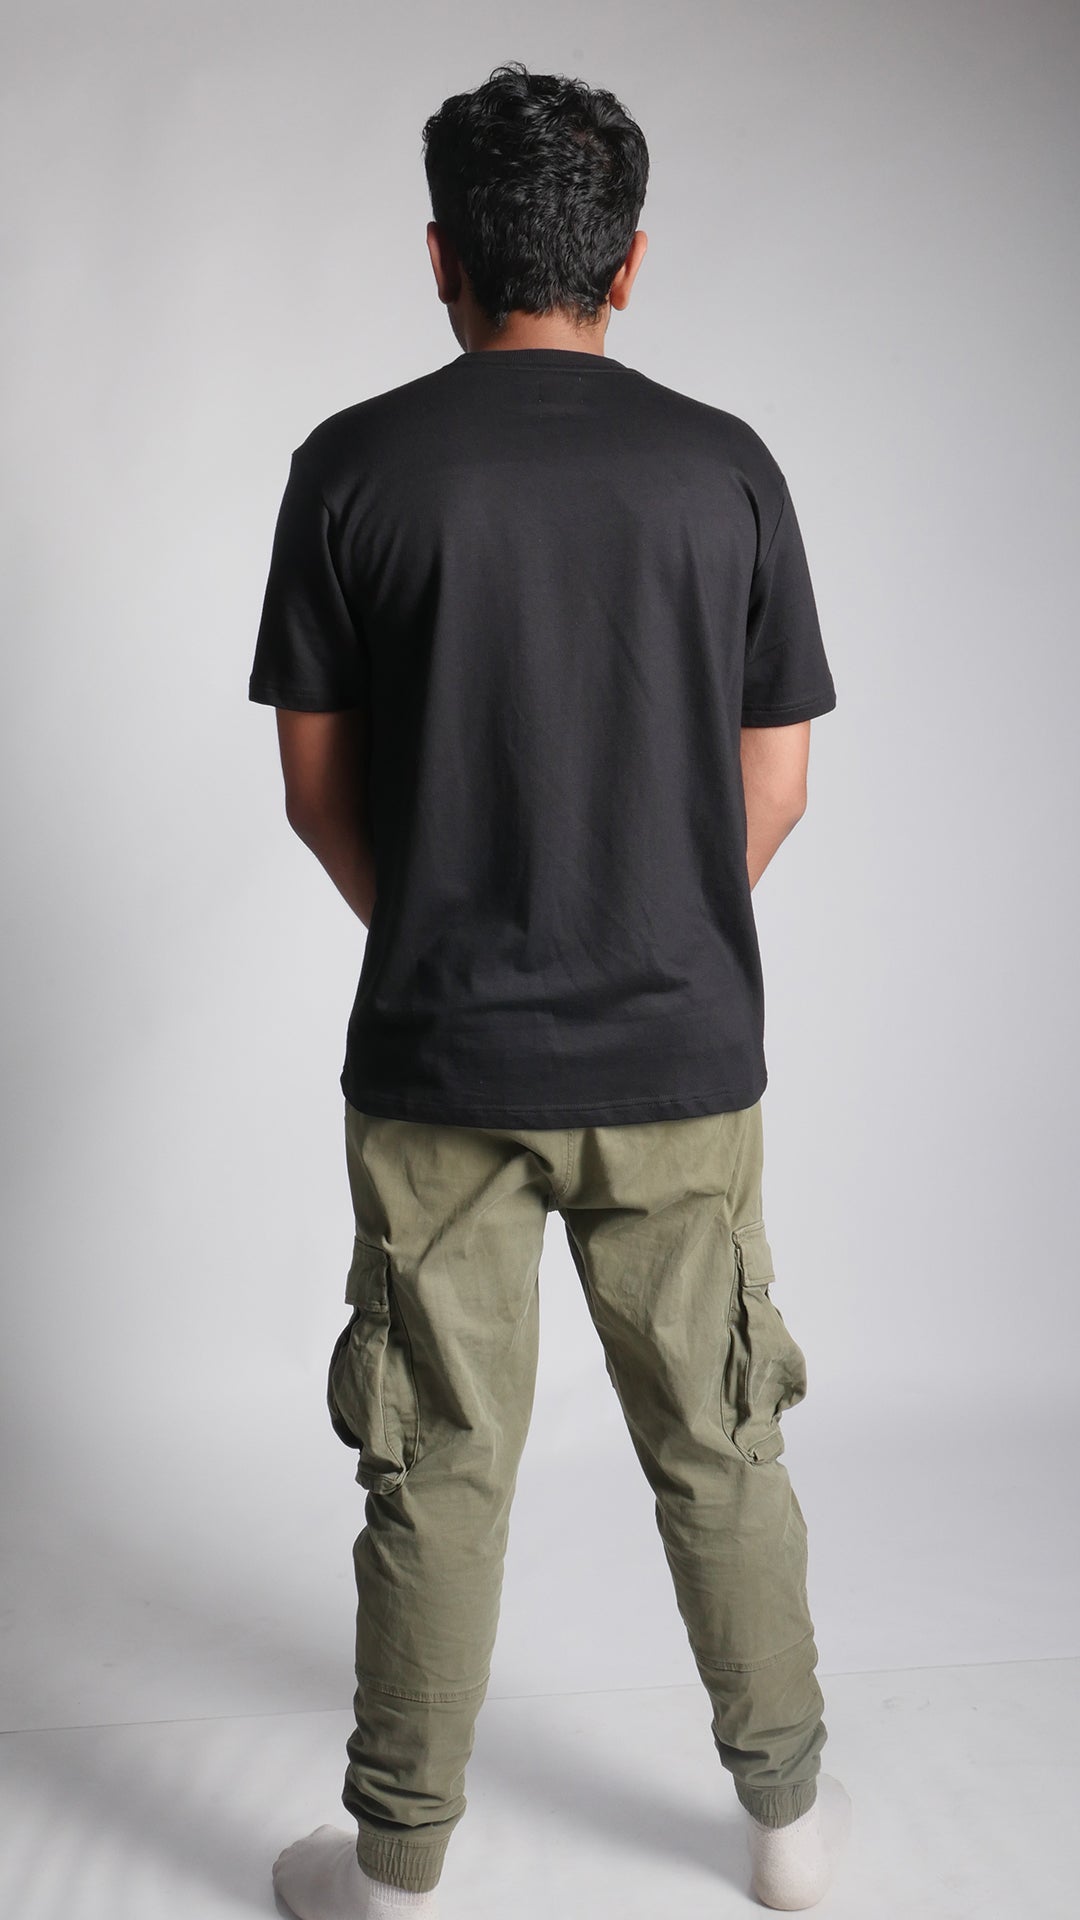 Back View of model wearing 10 Hills Studio Unisex 'Stop War' Black Boxy T-shirt